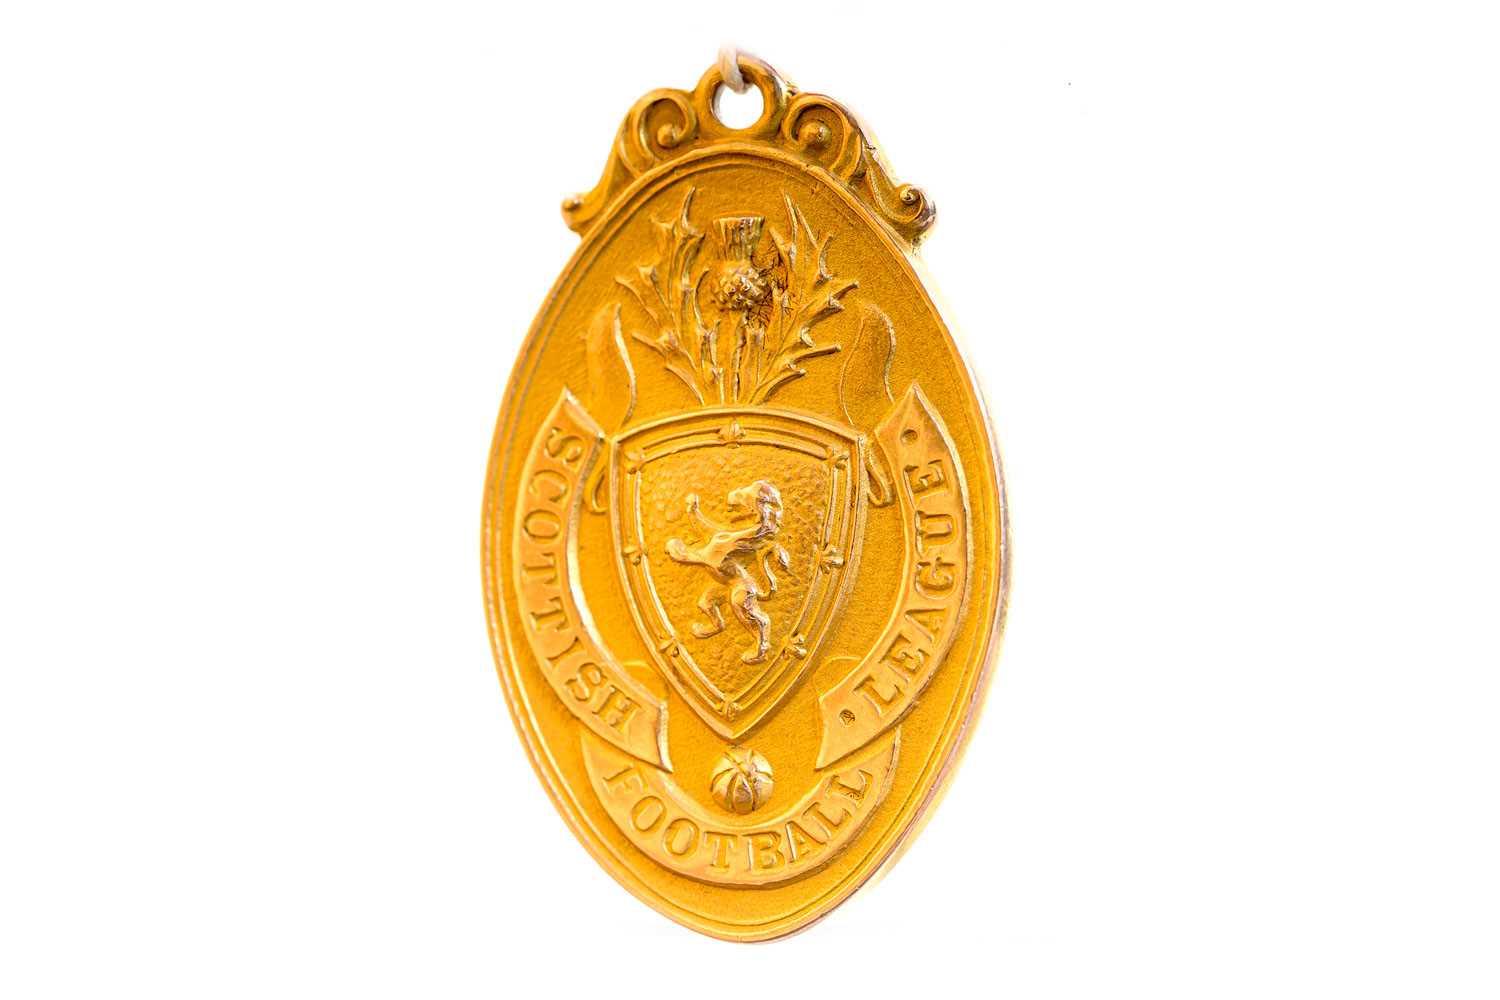 Lot 1911 - ROBERT WHITELAW OF CELTIC F.C., SCOTTISH FOOTBALL LEAGUE RUNNERS-UP GOLD MEDAL